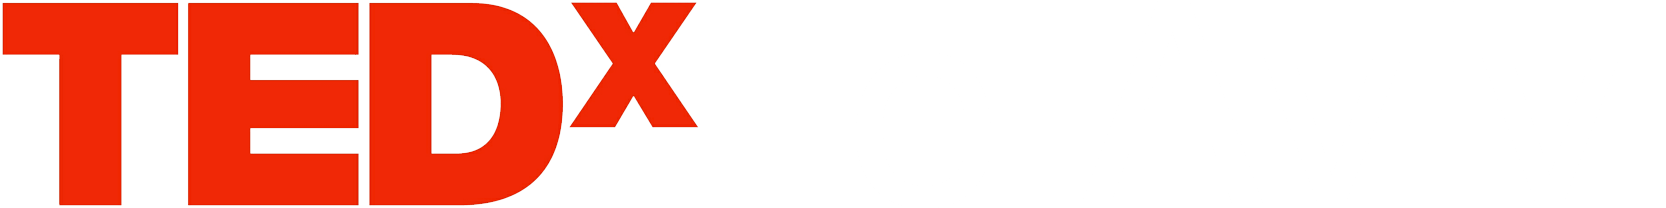 TED Talks Logo - Ted talks logo png 7 PNG Image